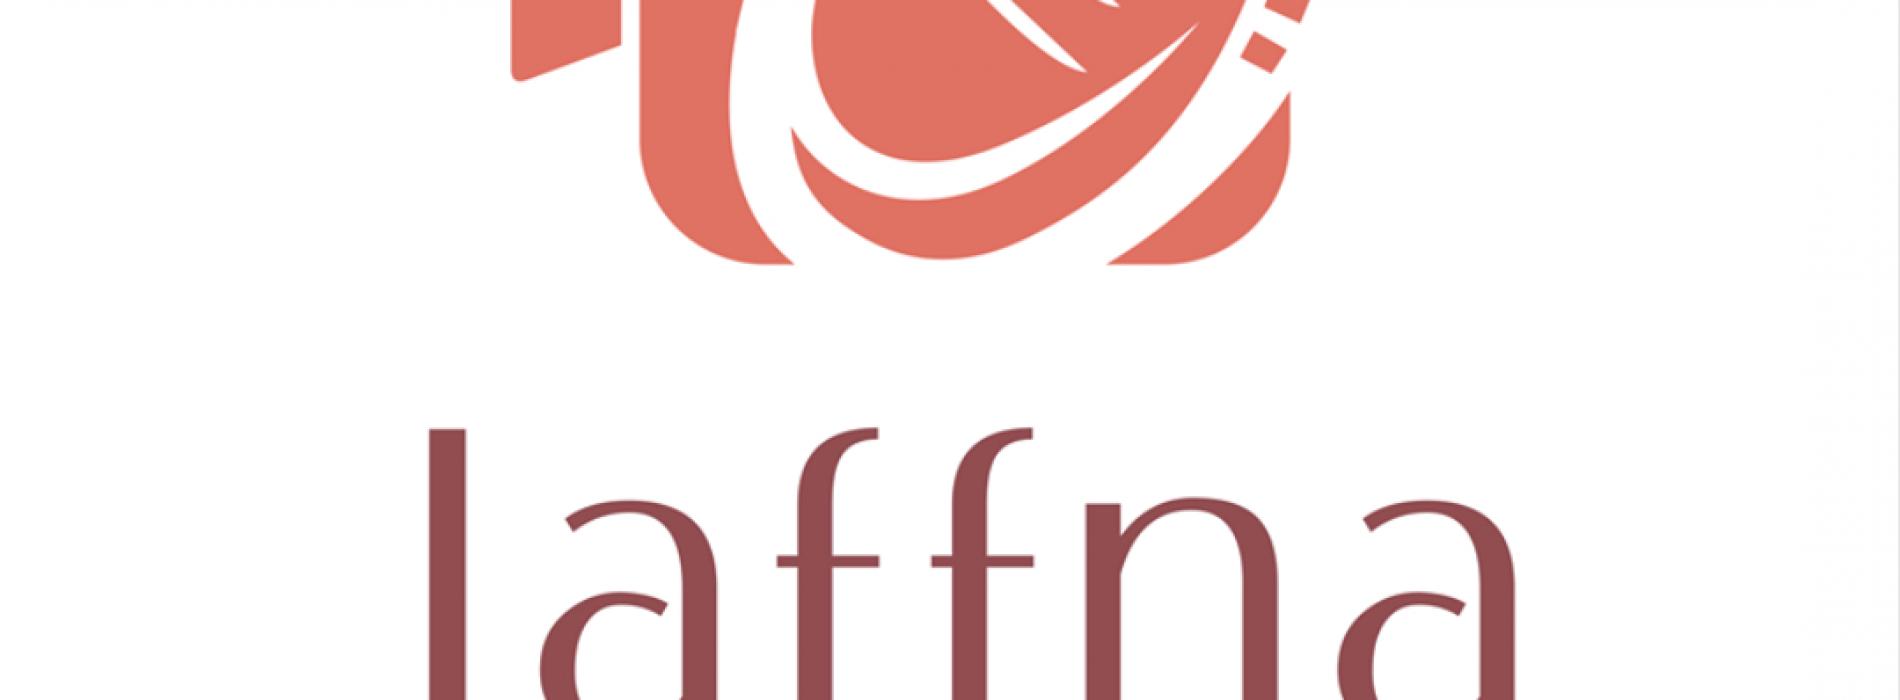 The Jaffna International Cinema Festival Is On This October